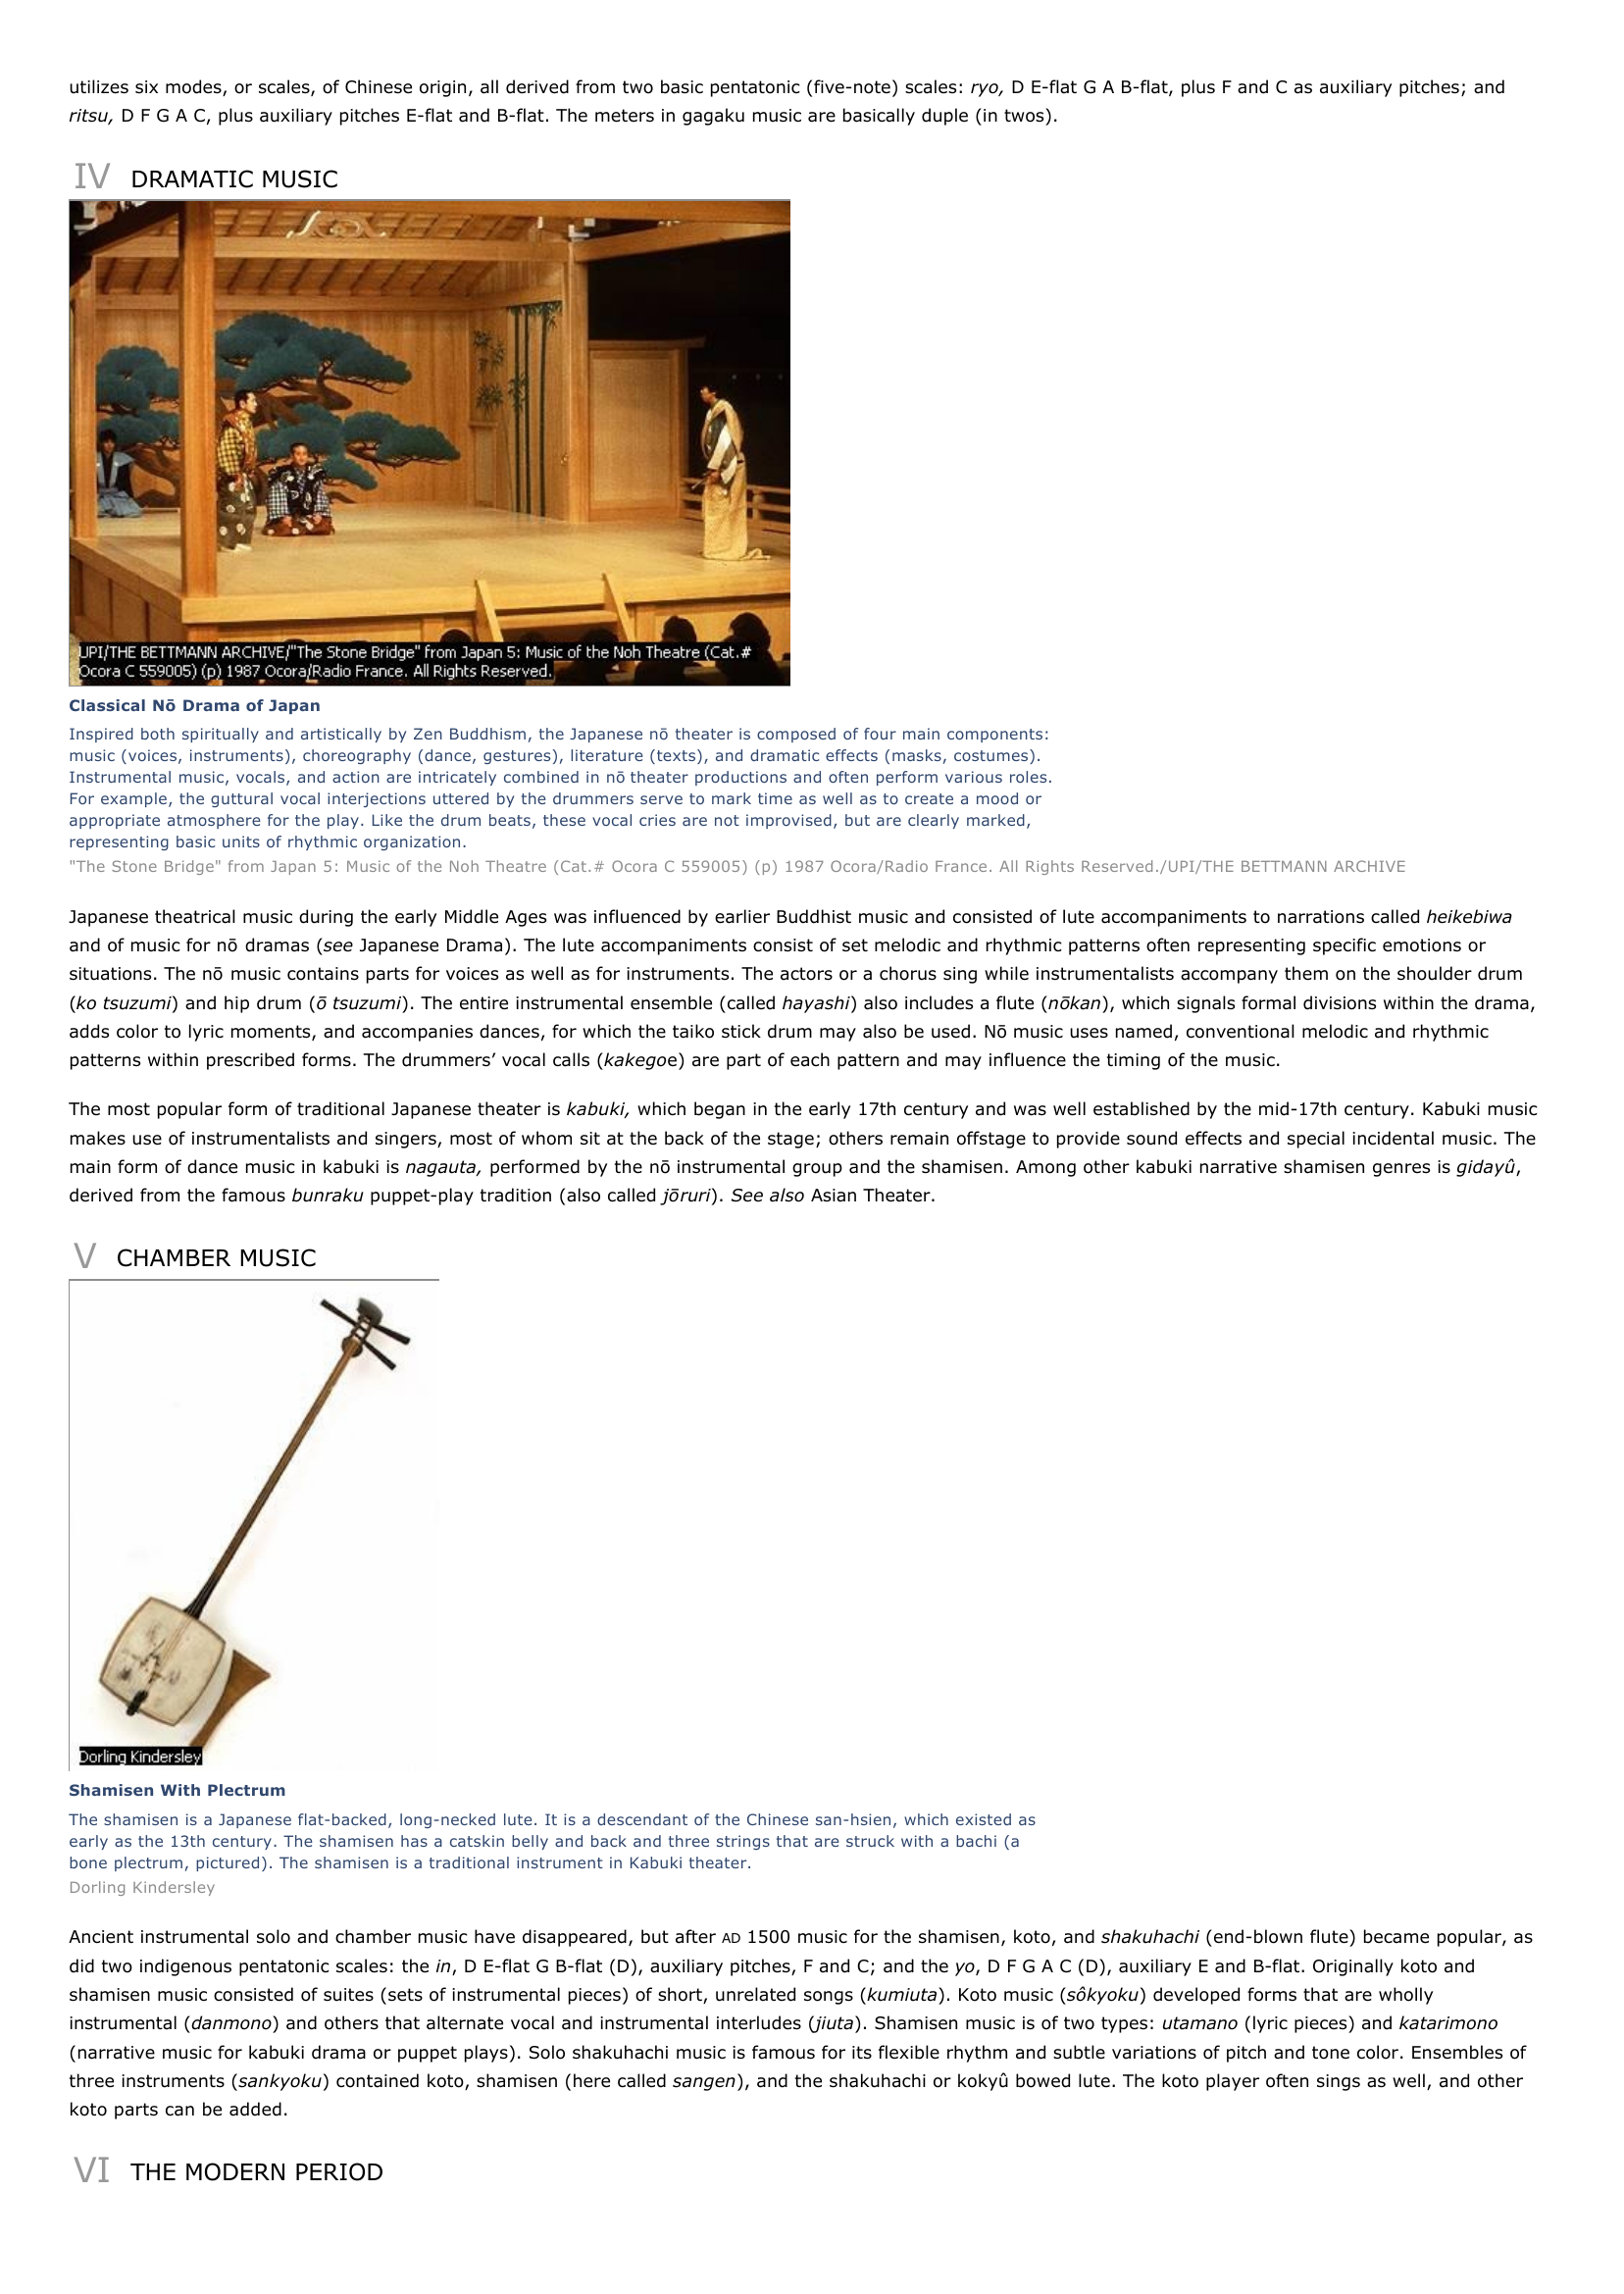 Prévisualisation du document Japanese Music
I

INTRODUCTION

Shamisen Performance
The shamisen is a Japanese instrument with three strings.